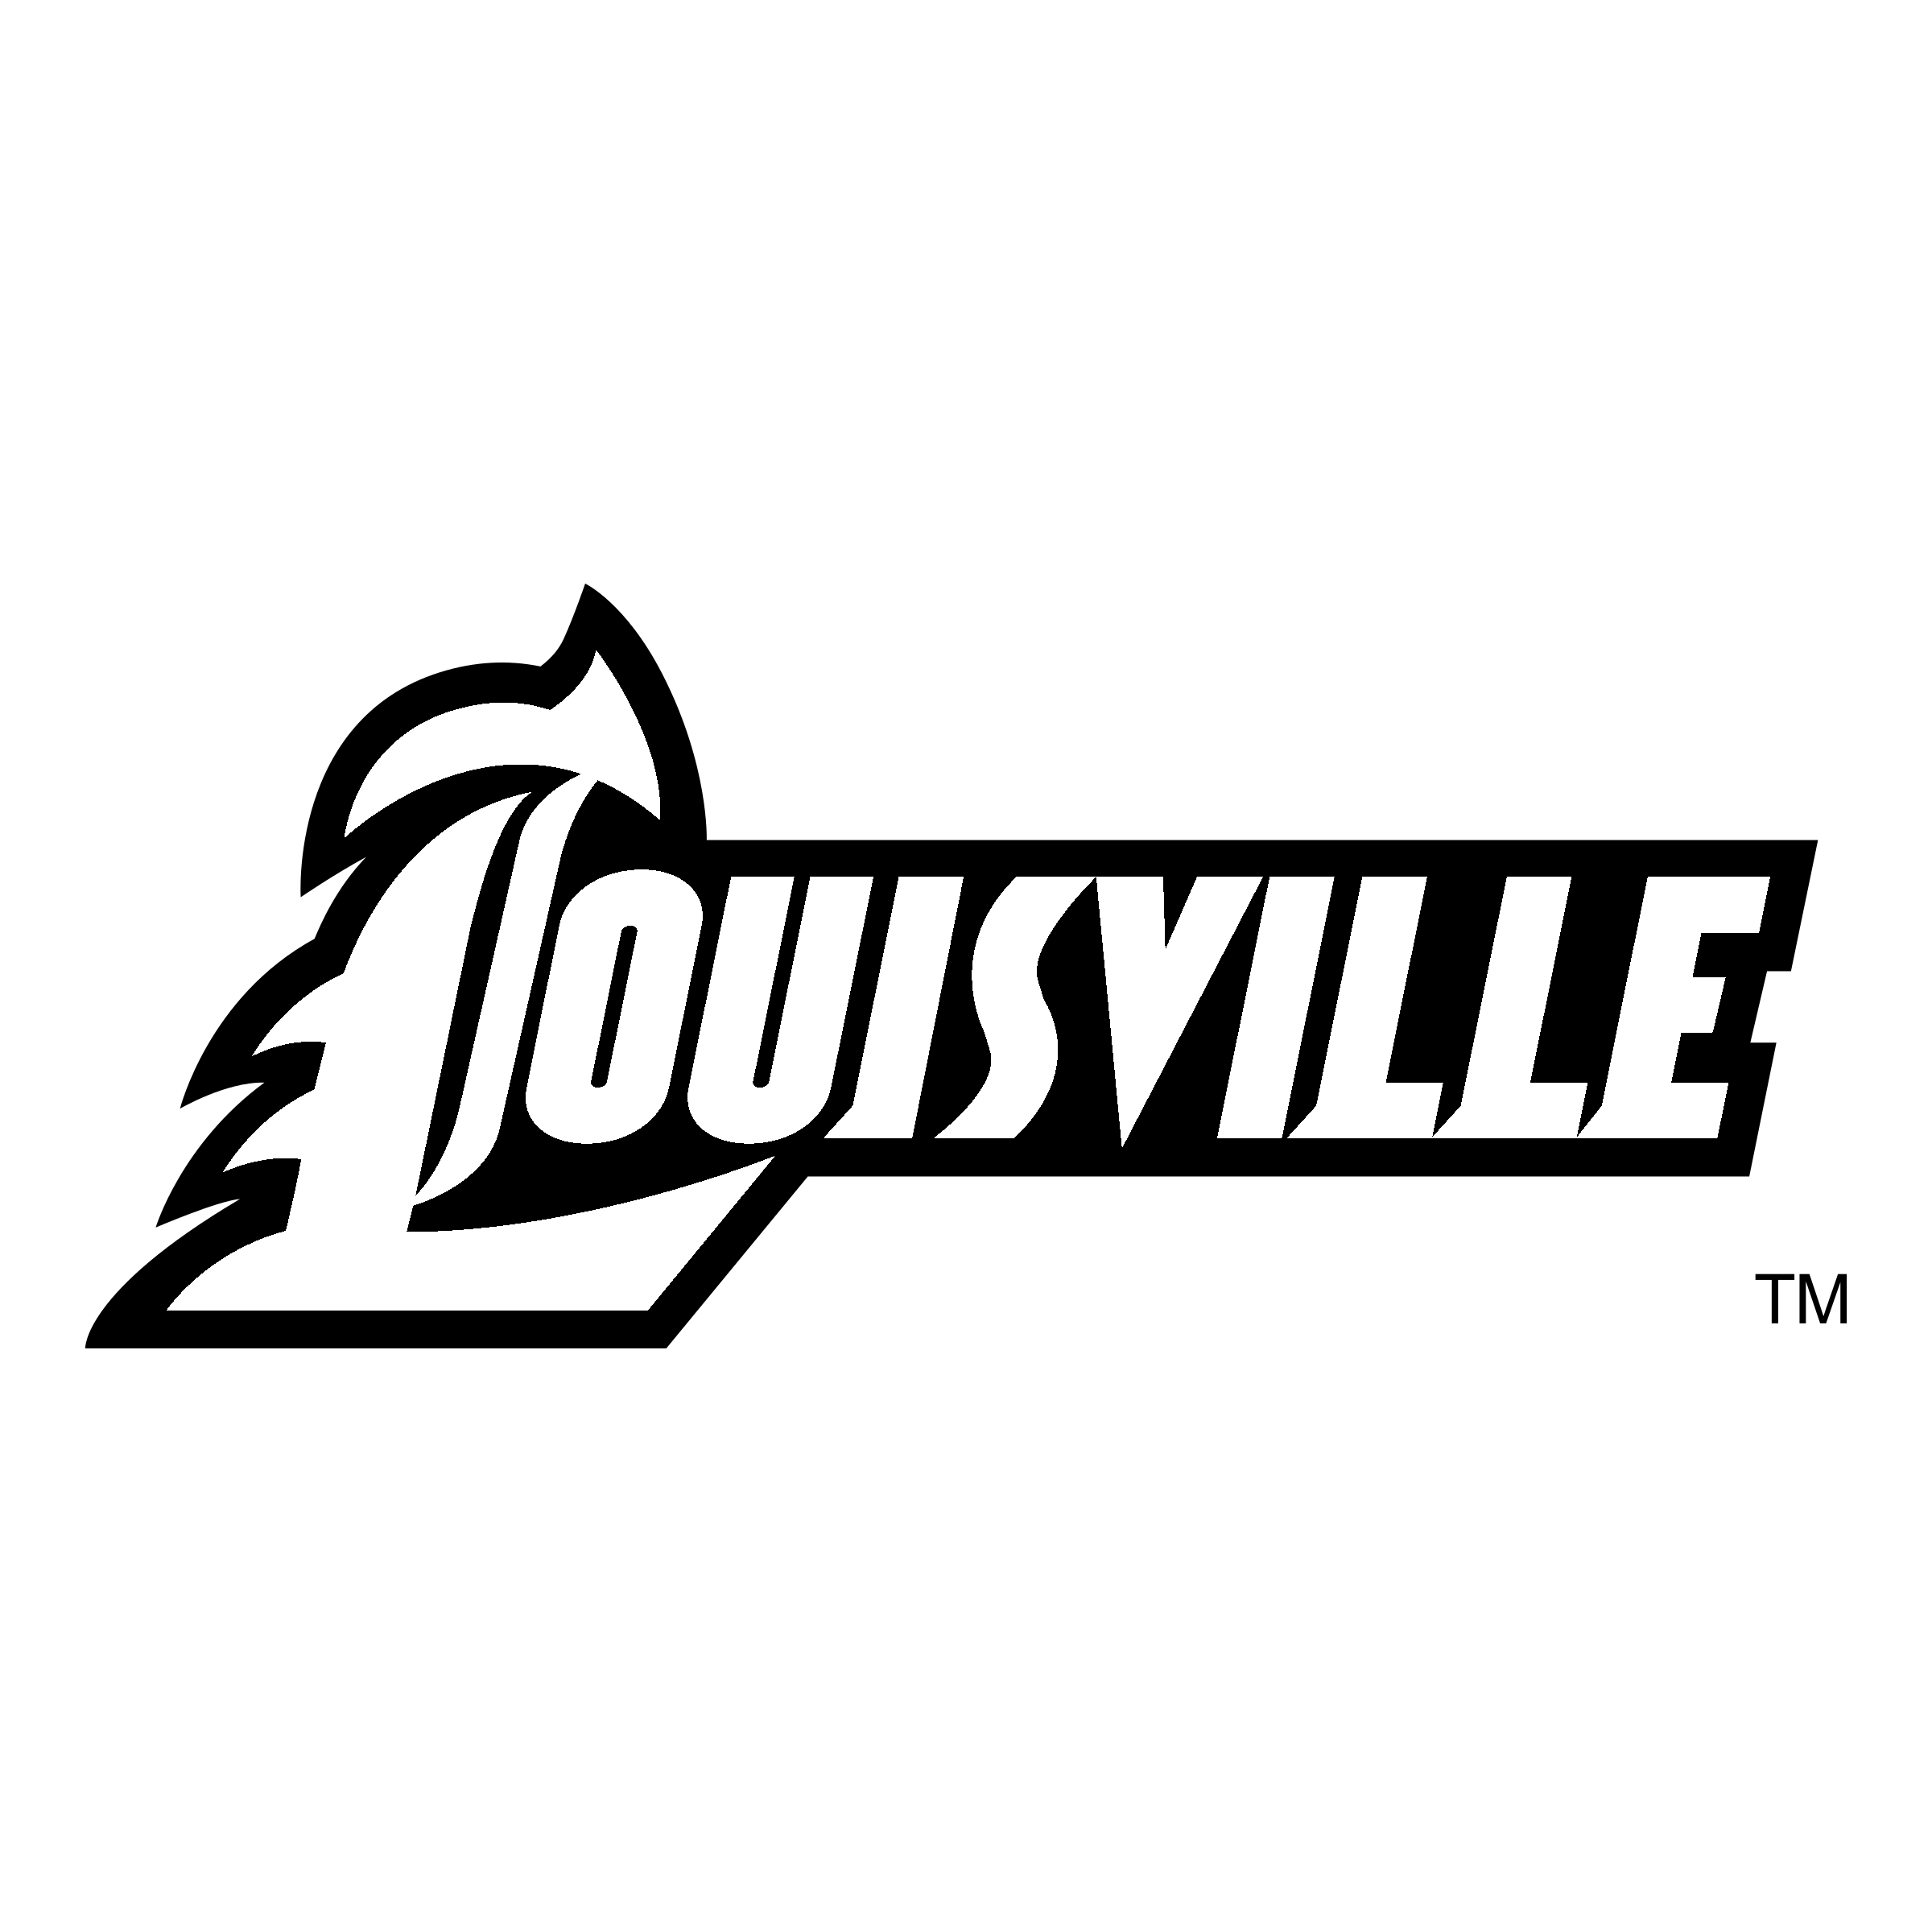 Louisville Cardinals Logo - Louisville Cardinals Logo PNG Transparent & SVG Vector - Freebie Supply